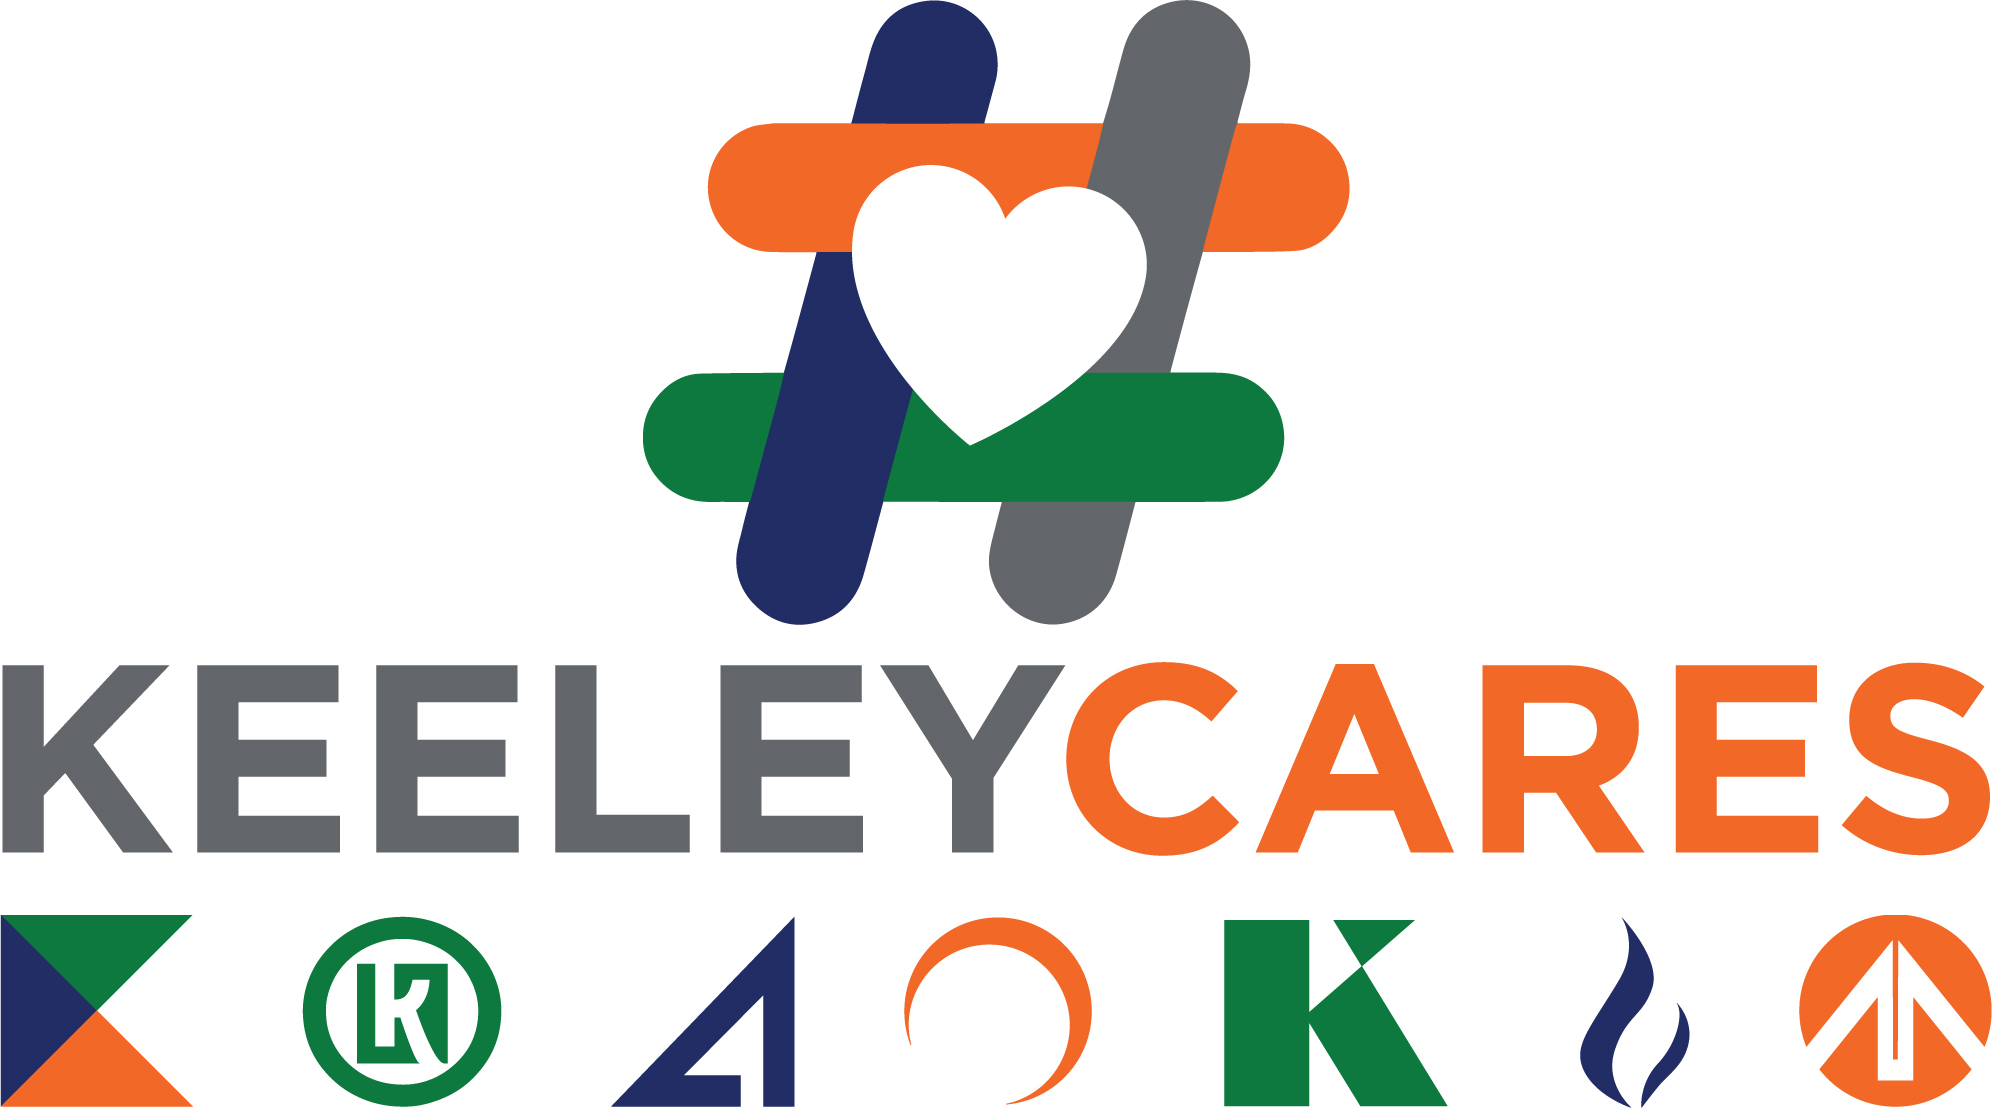 03.2-Keeley Companies- $5k- Golf cart sponsor